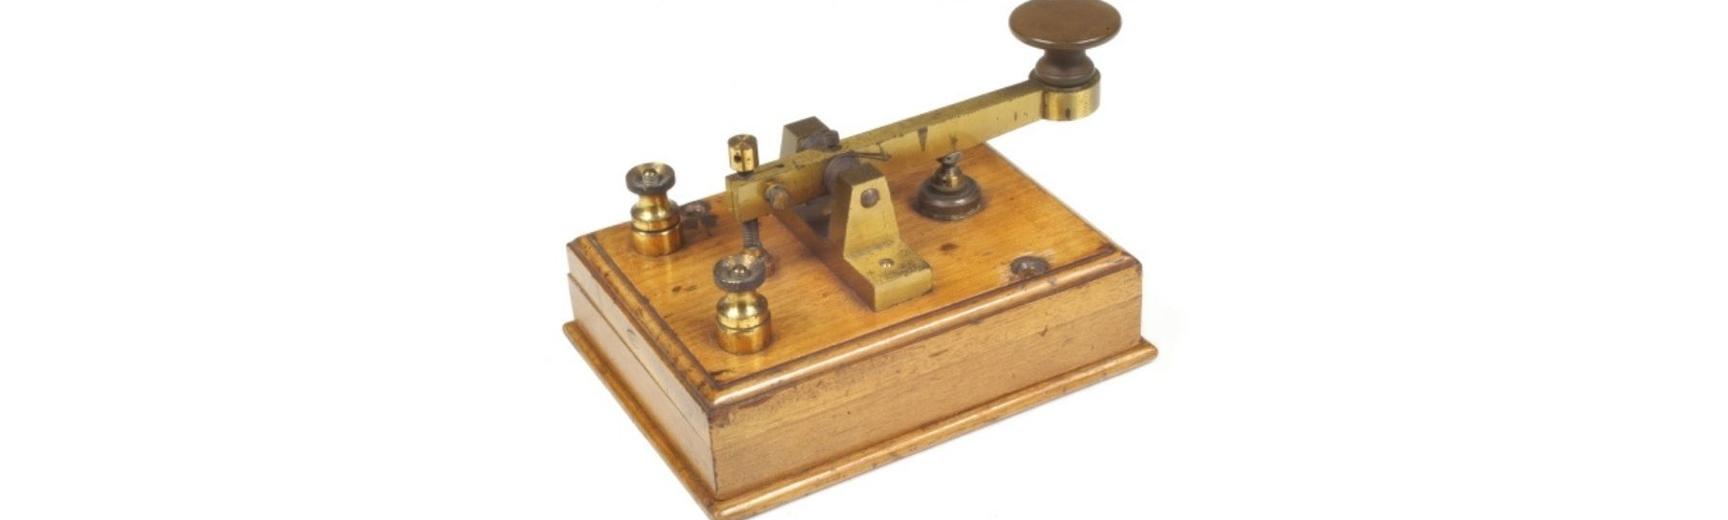 86892 Morse Key, by Marconi Company, English, c. 1900